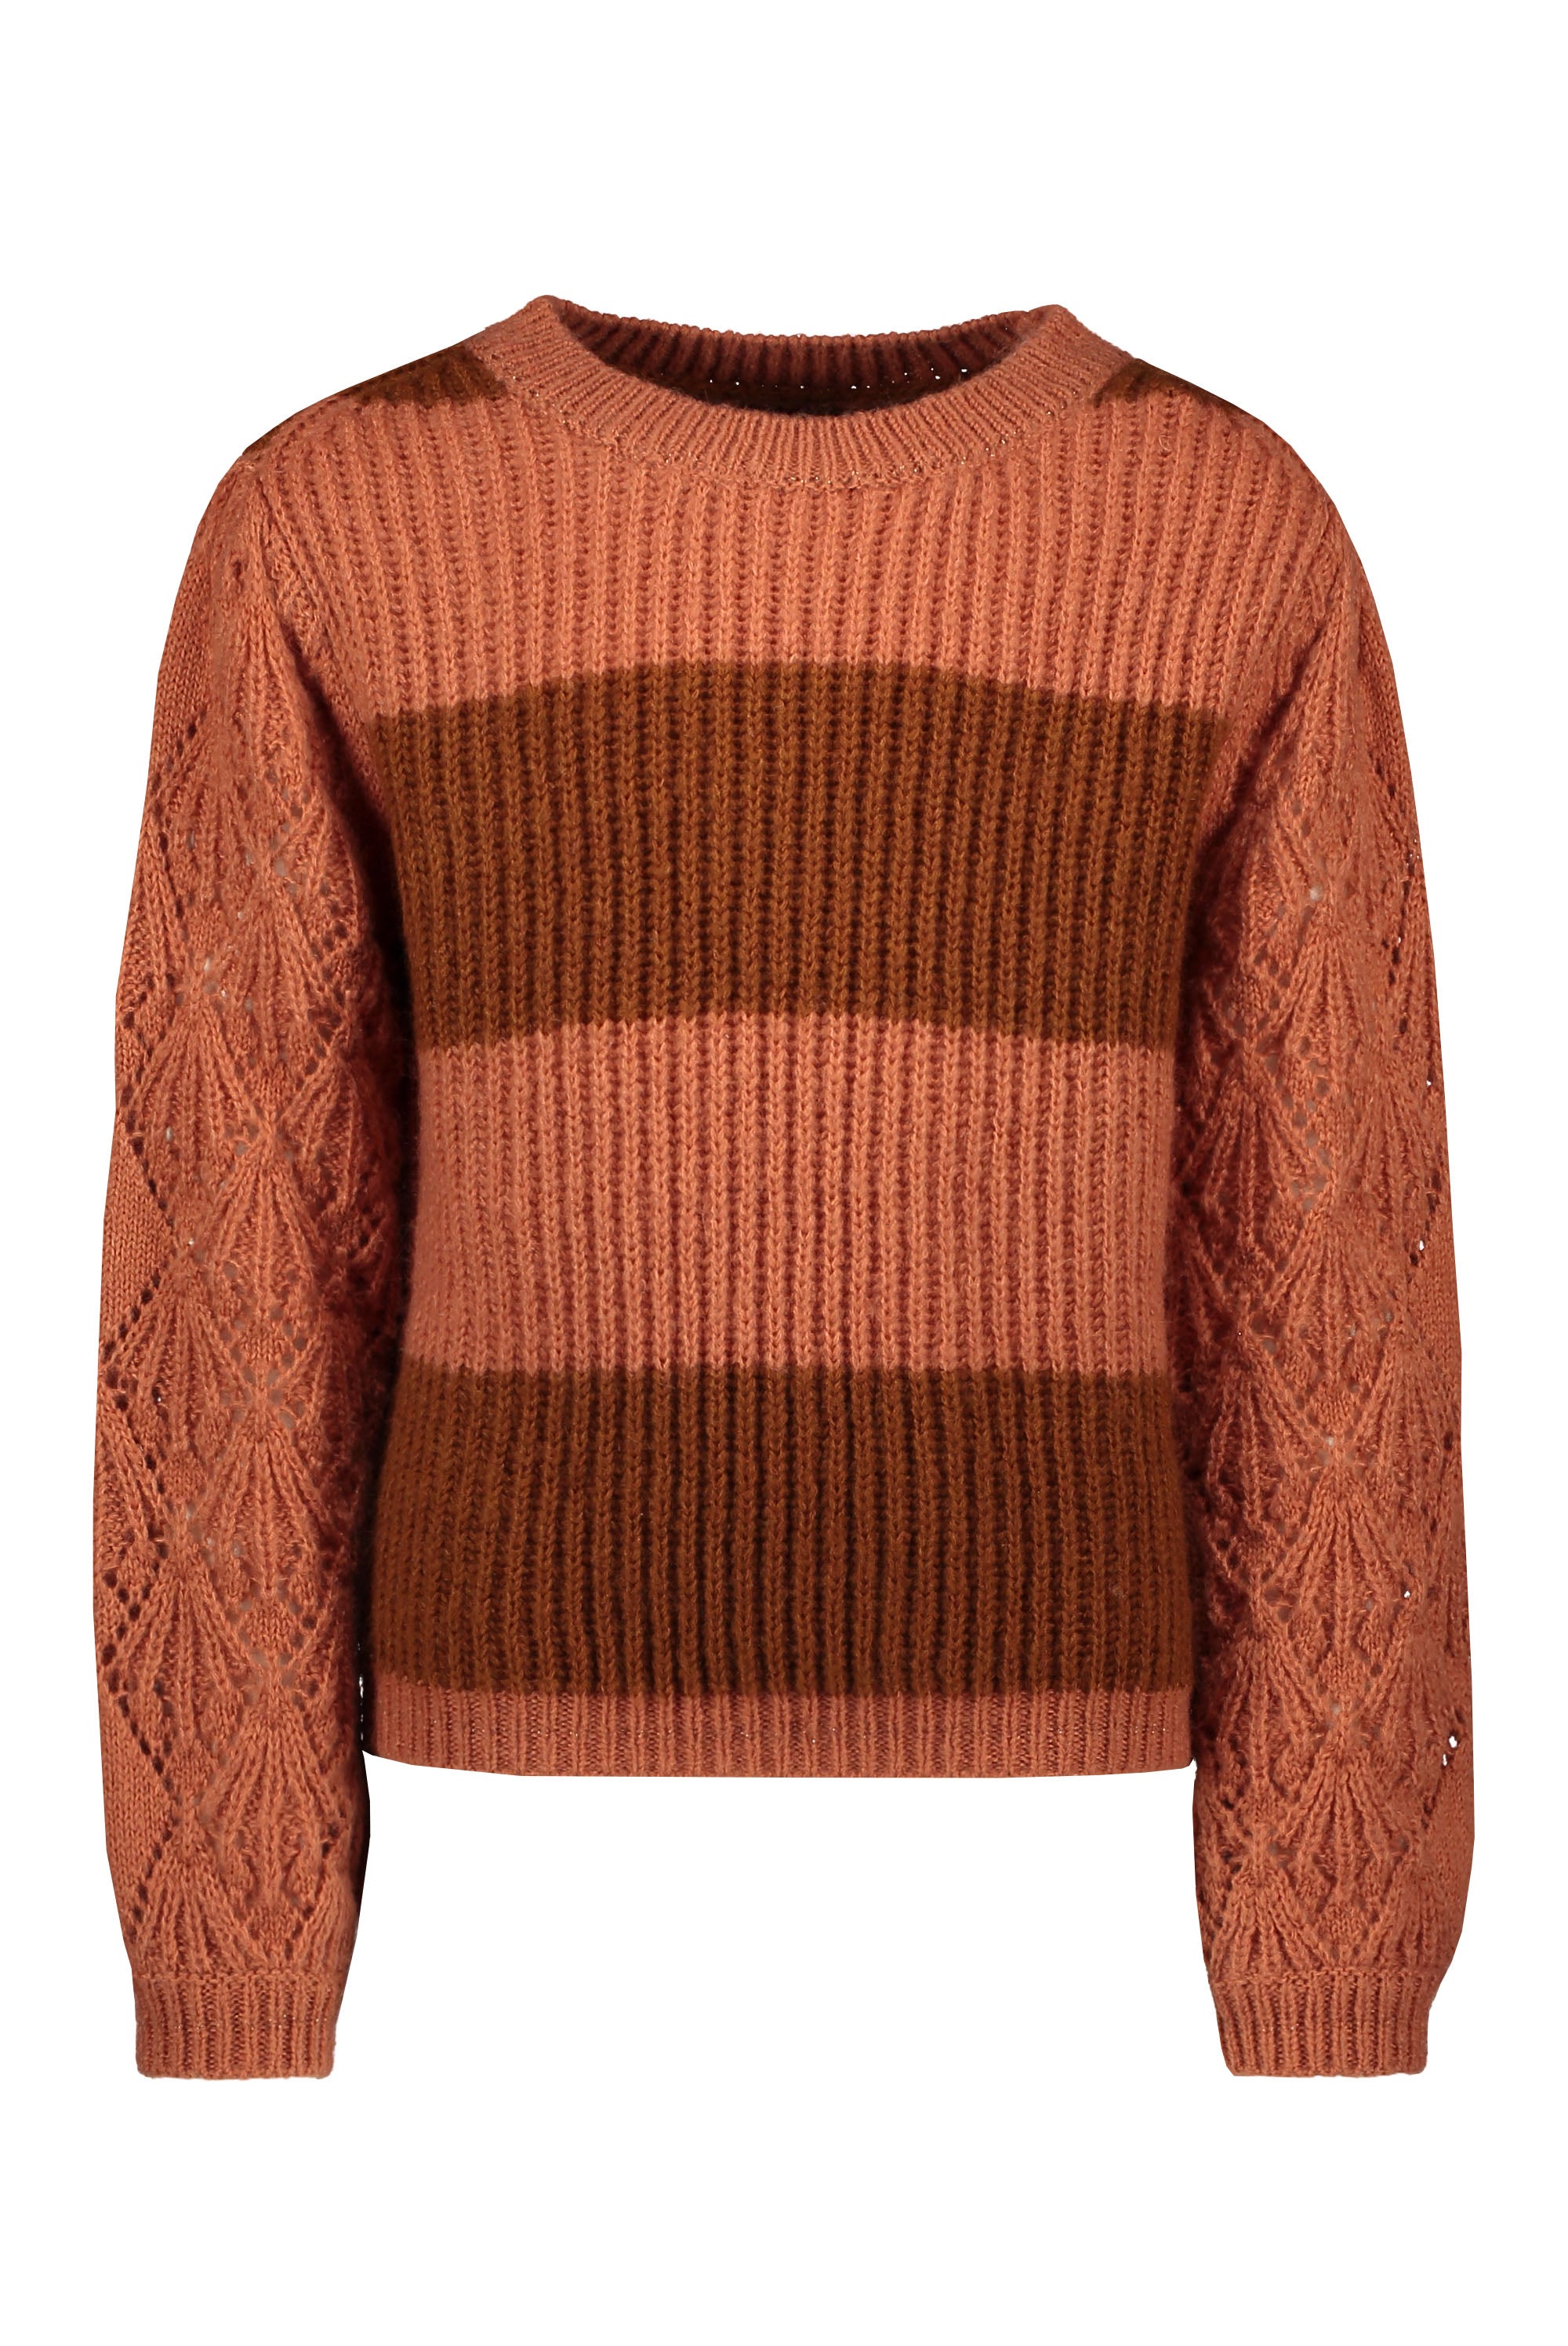 Flo Flo girls knitted openwork sweater